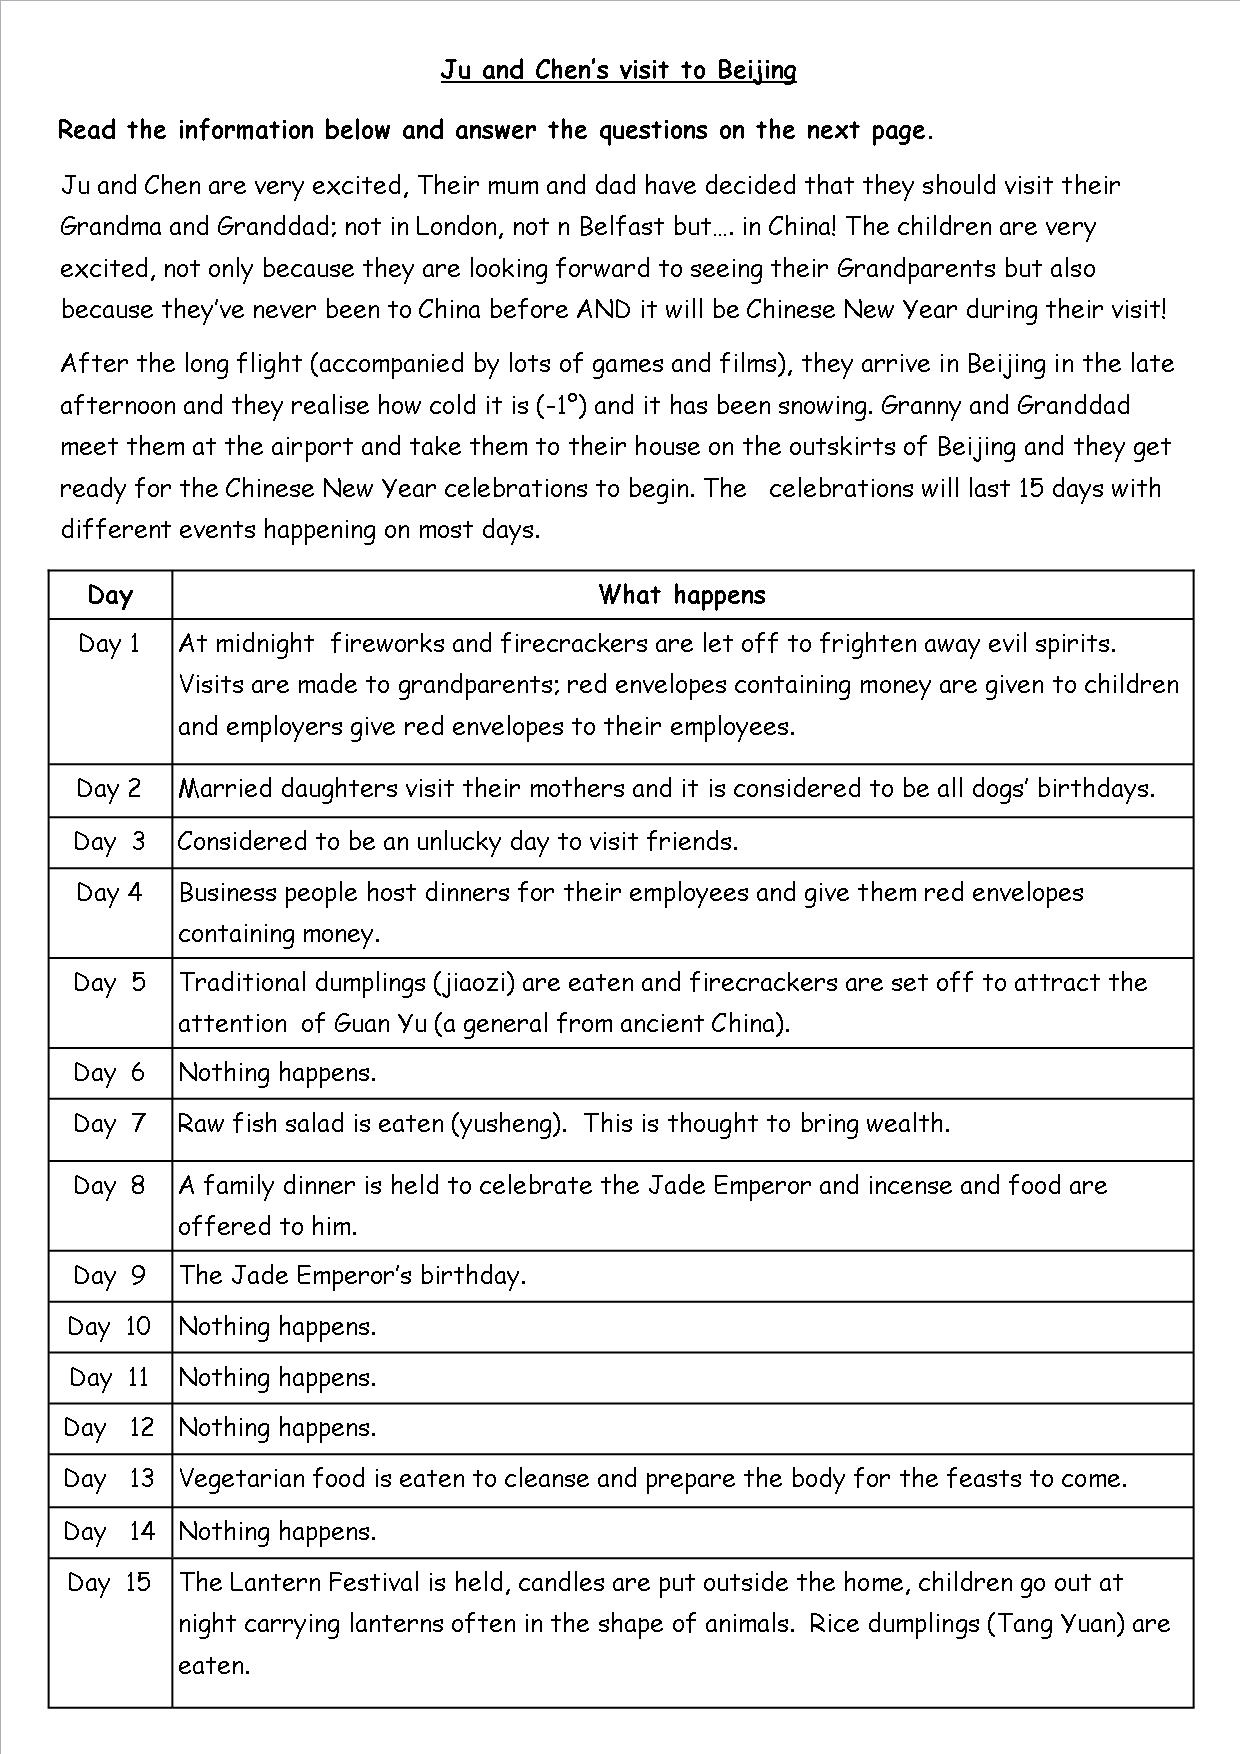 EYFS, KS1, KS2, SEN, Chinese New Year worksheets and 